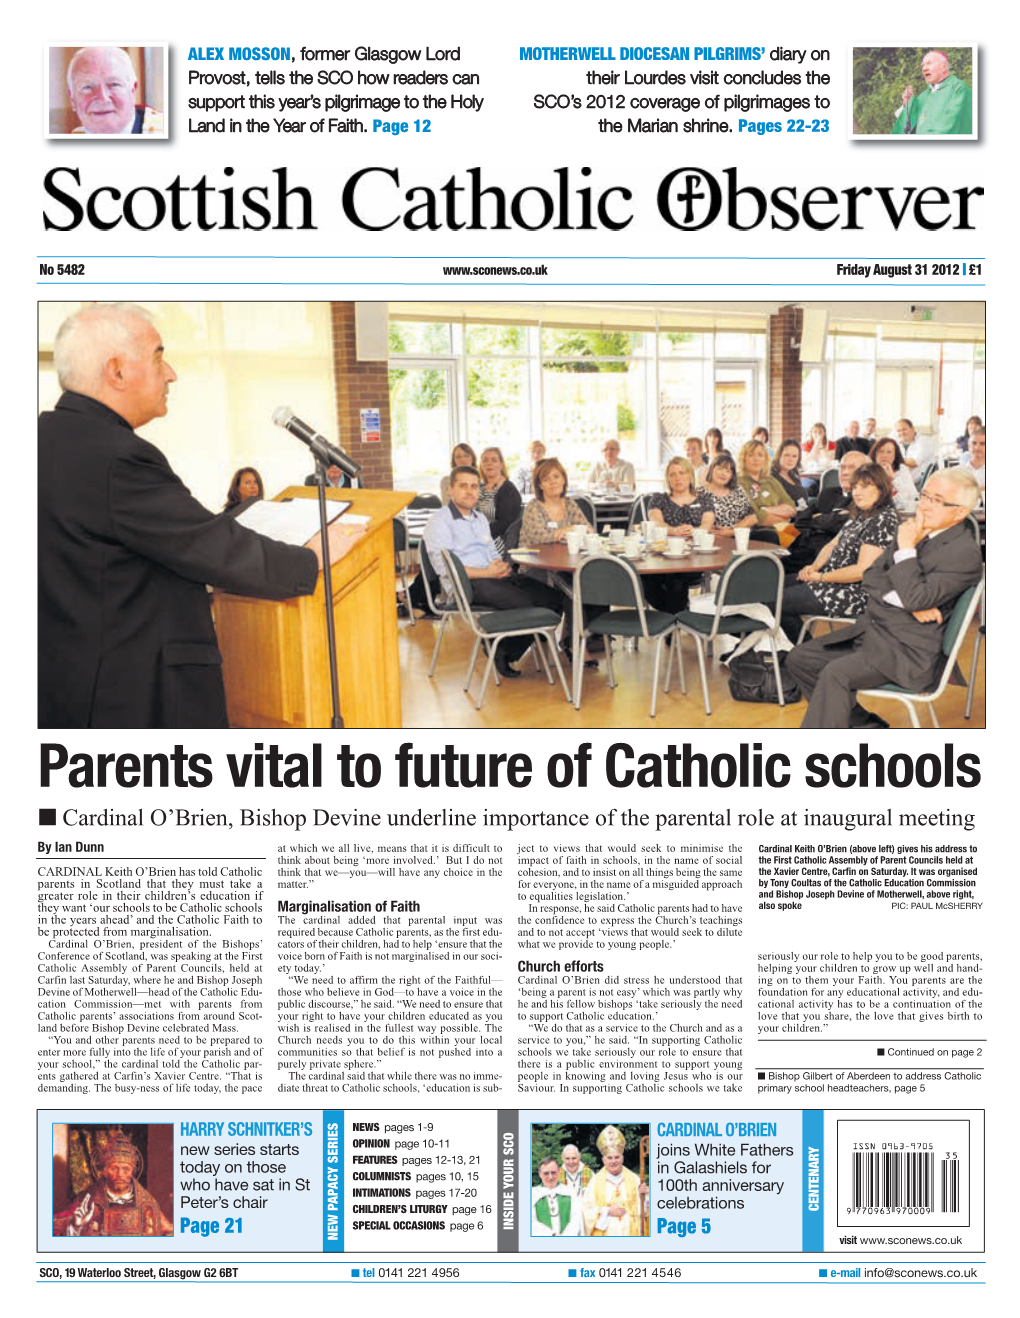 Parents Vital to Future of Catholic Schools